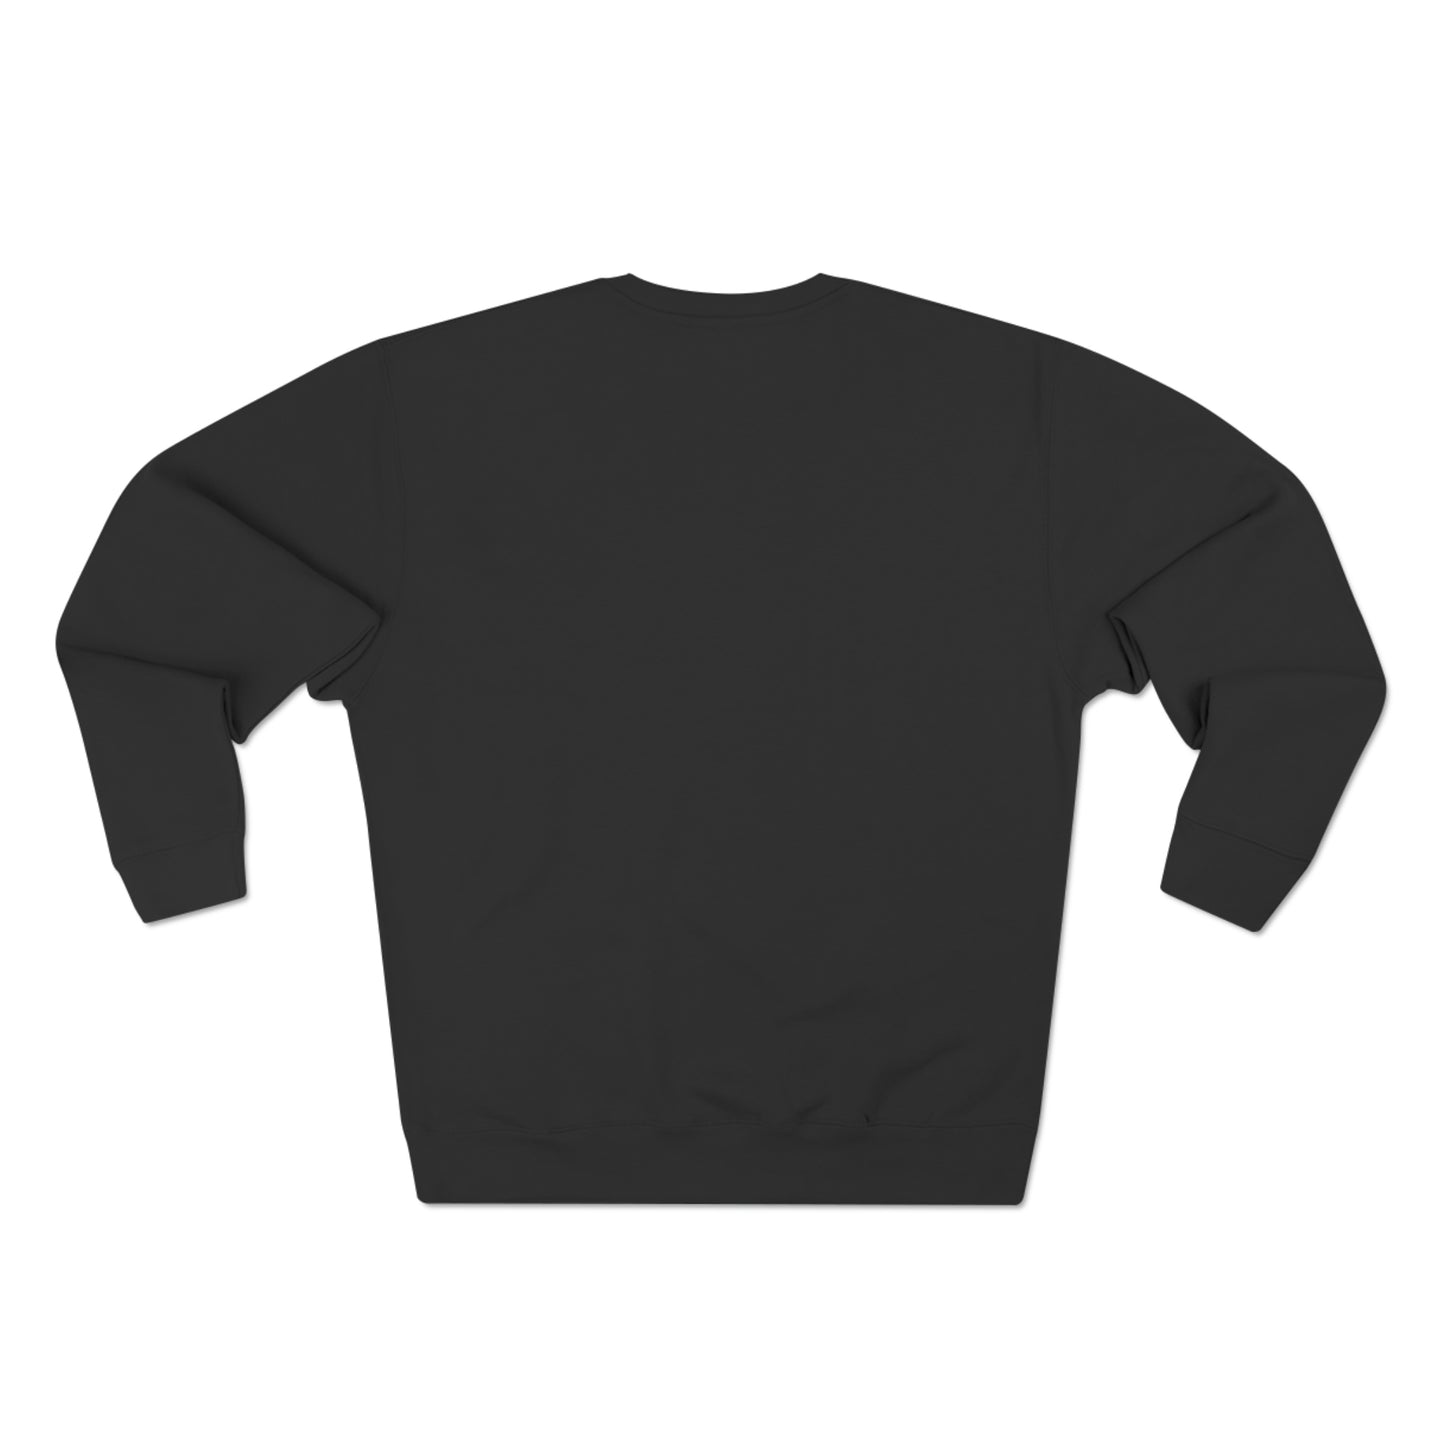 Black long sleeve shirt with Logo in the middle • შავი გრძელმკლავიანი მაისური ცენტრში ლოგოთი (UNISEX)